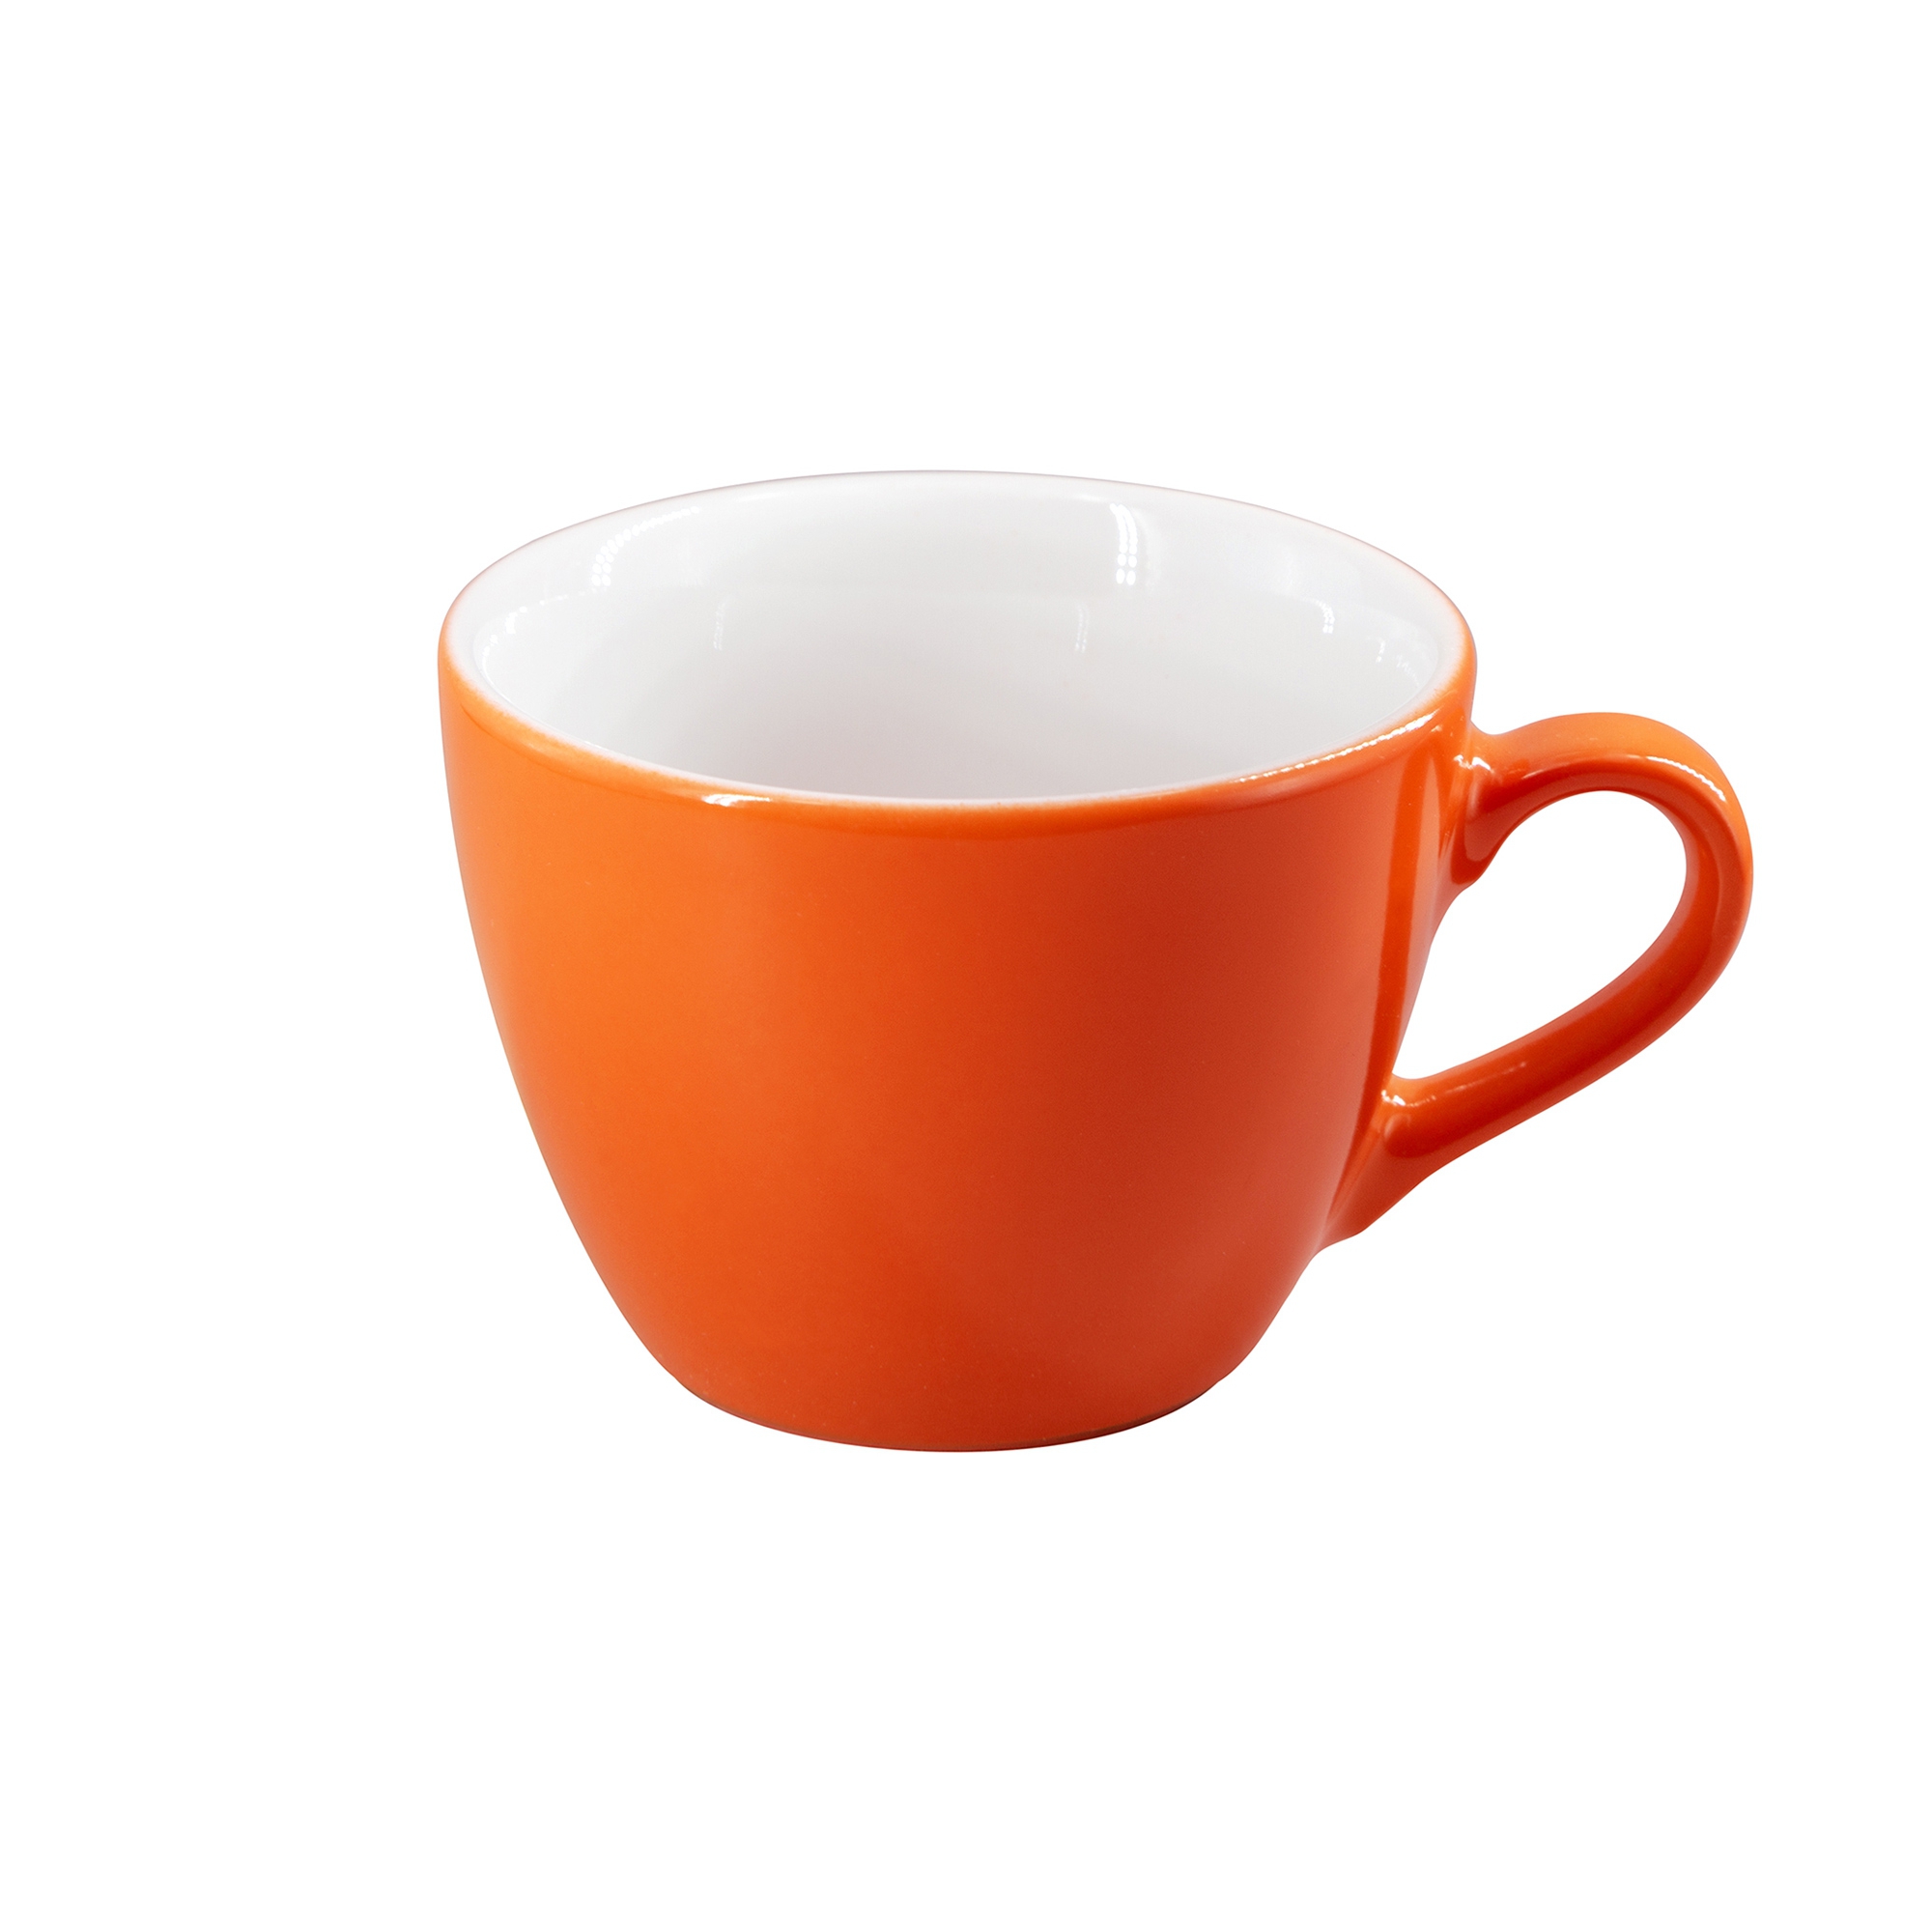 Eschenbach - cup 0.21 l - orange